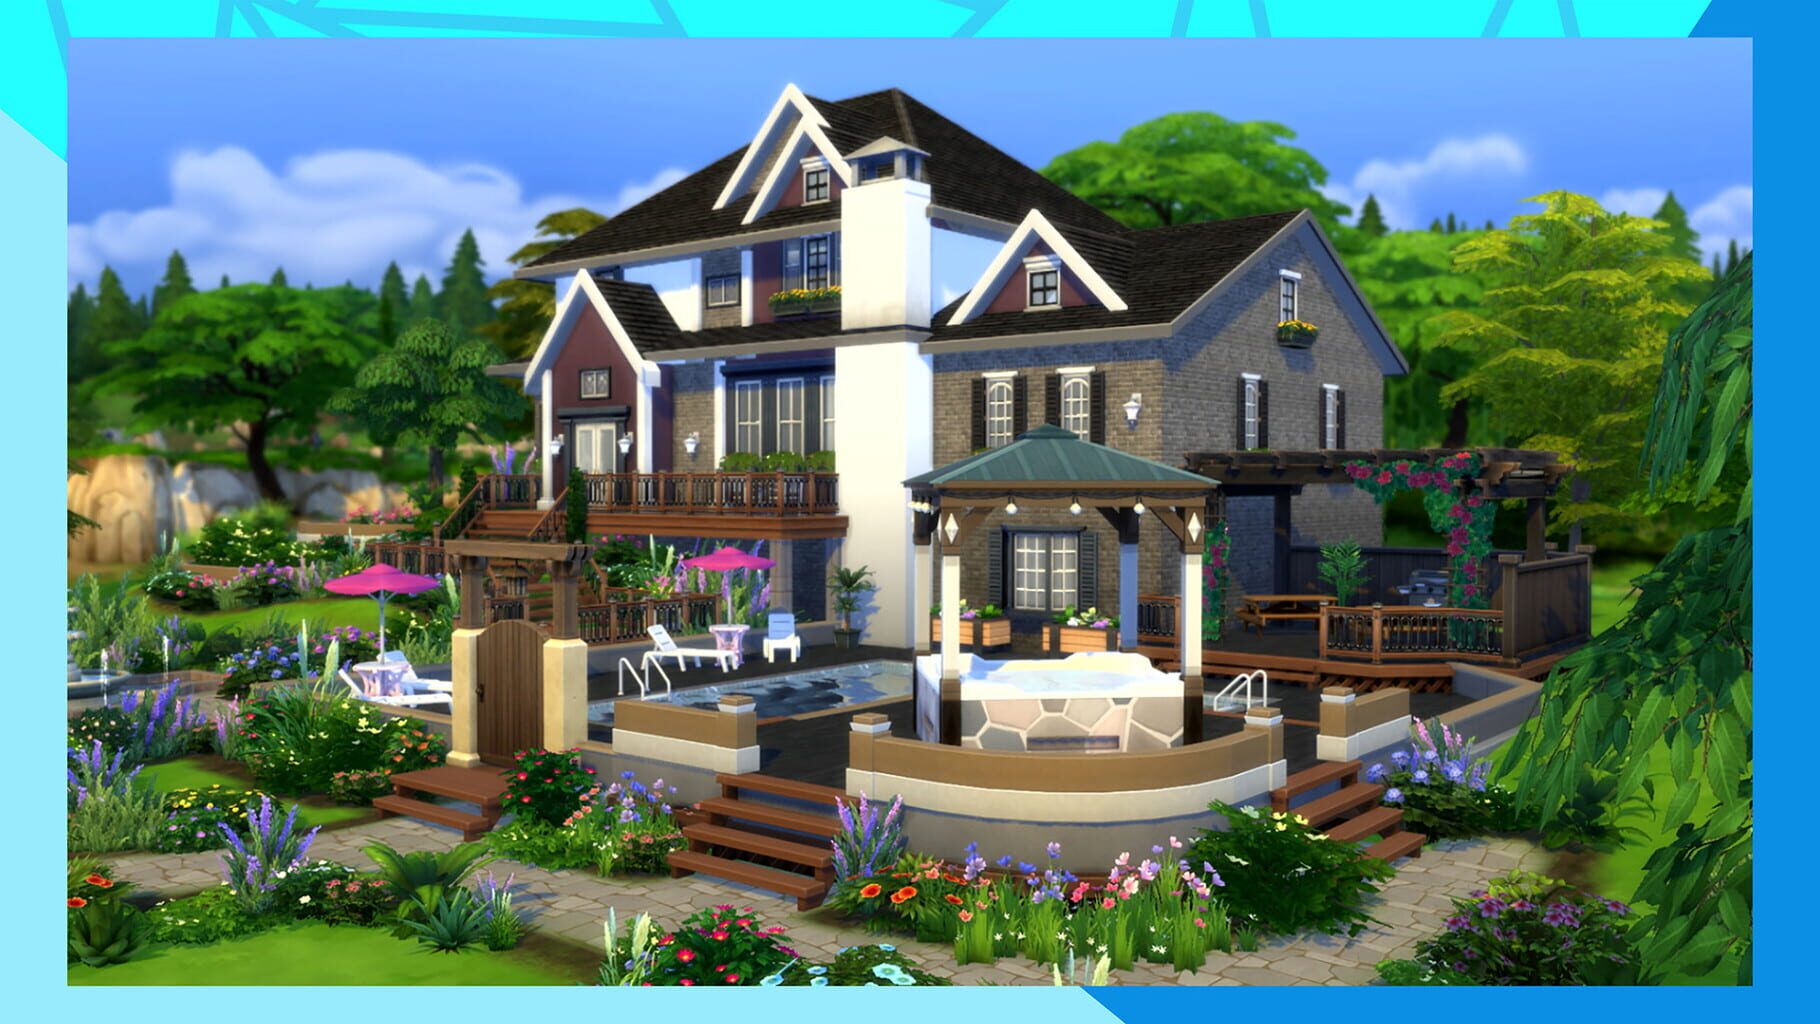 Arte - The Sims 4: Plus Eco Lifestyle Bundle